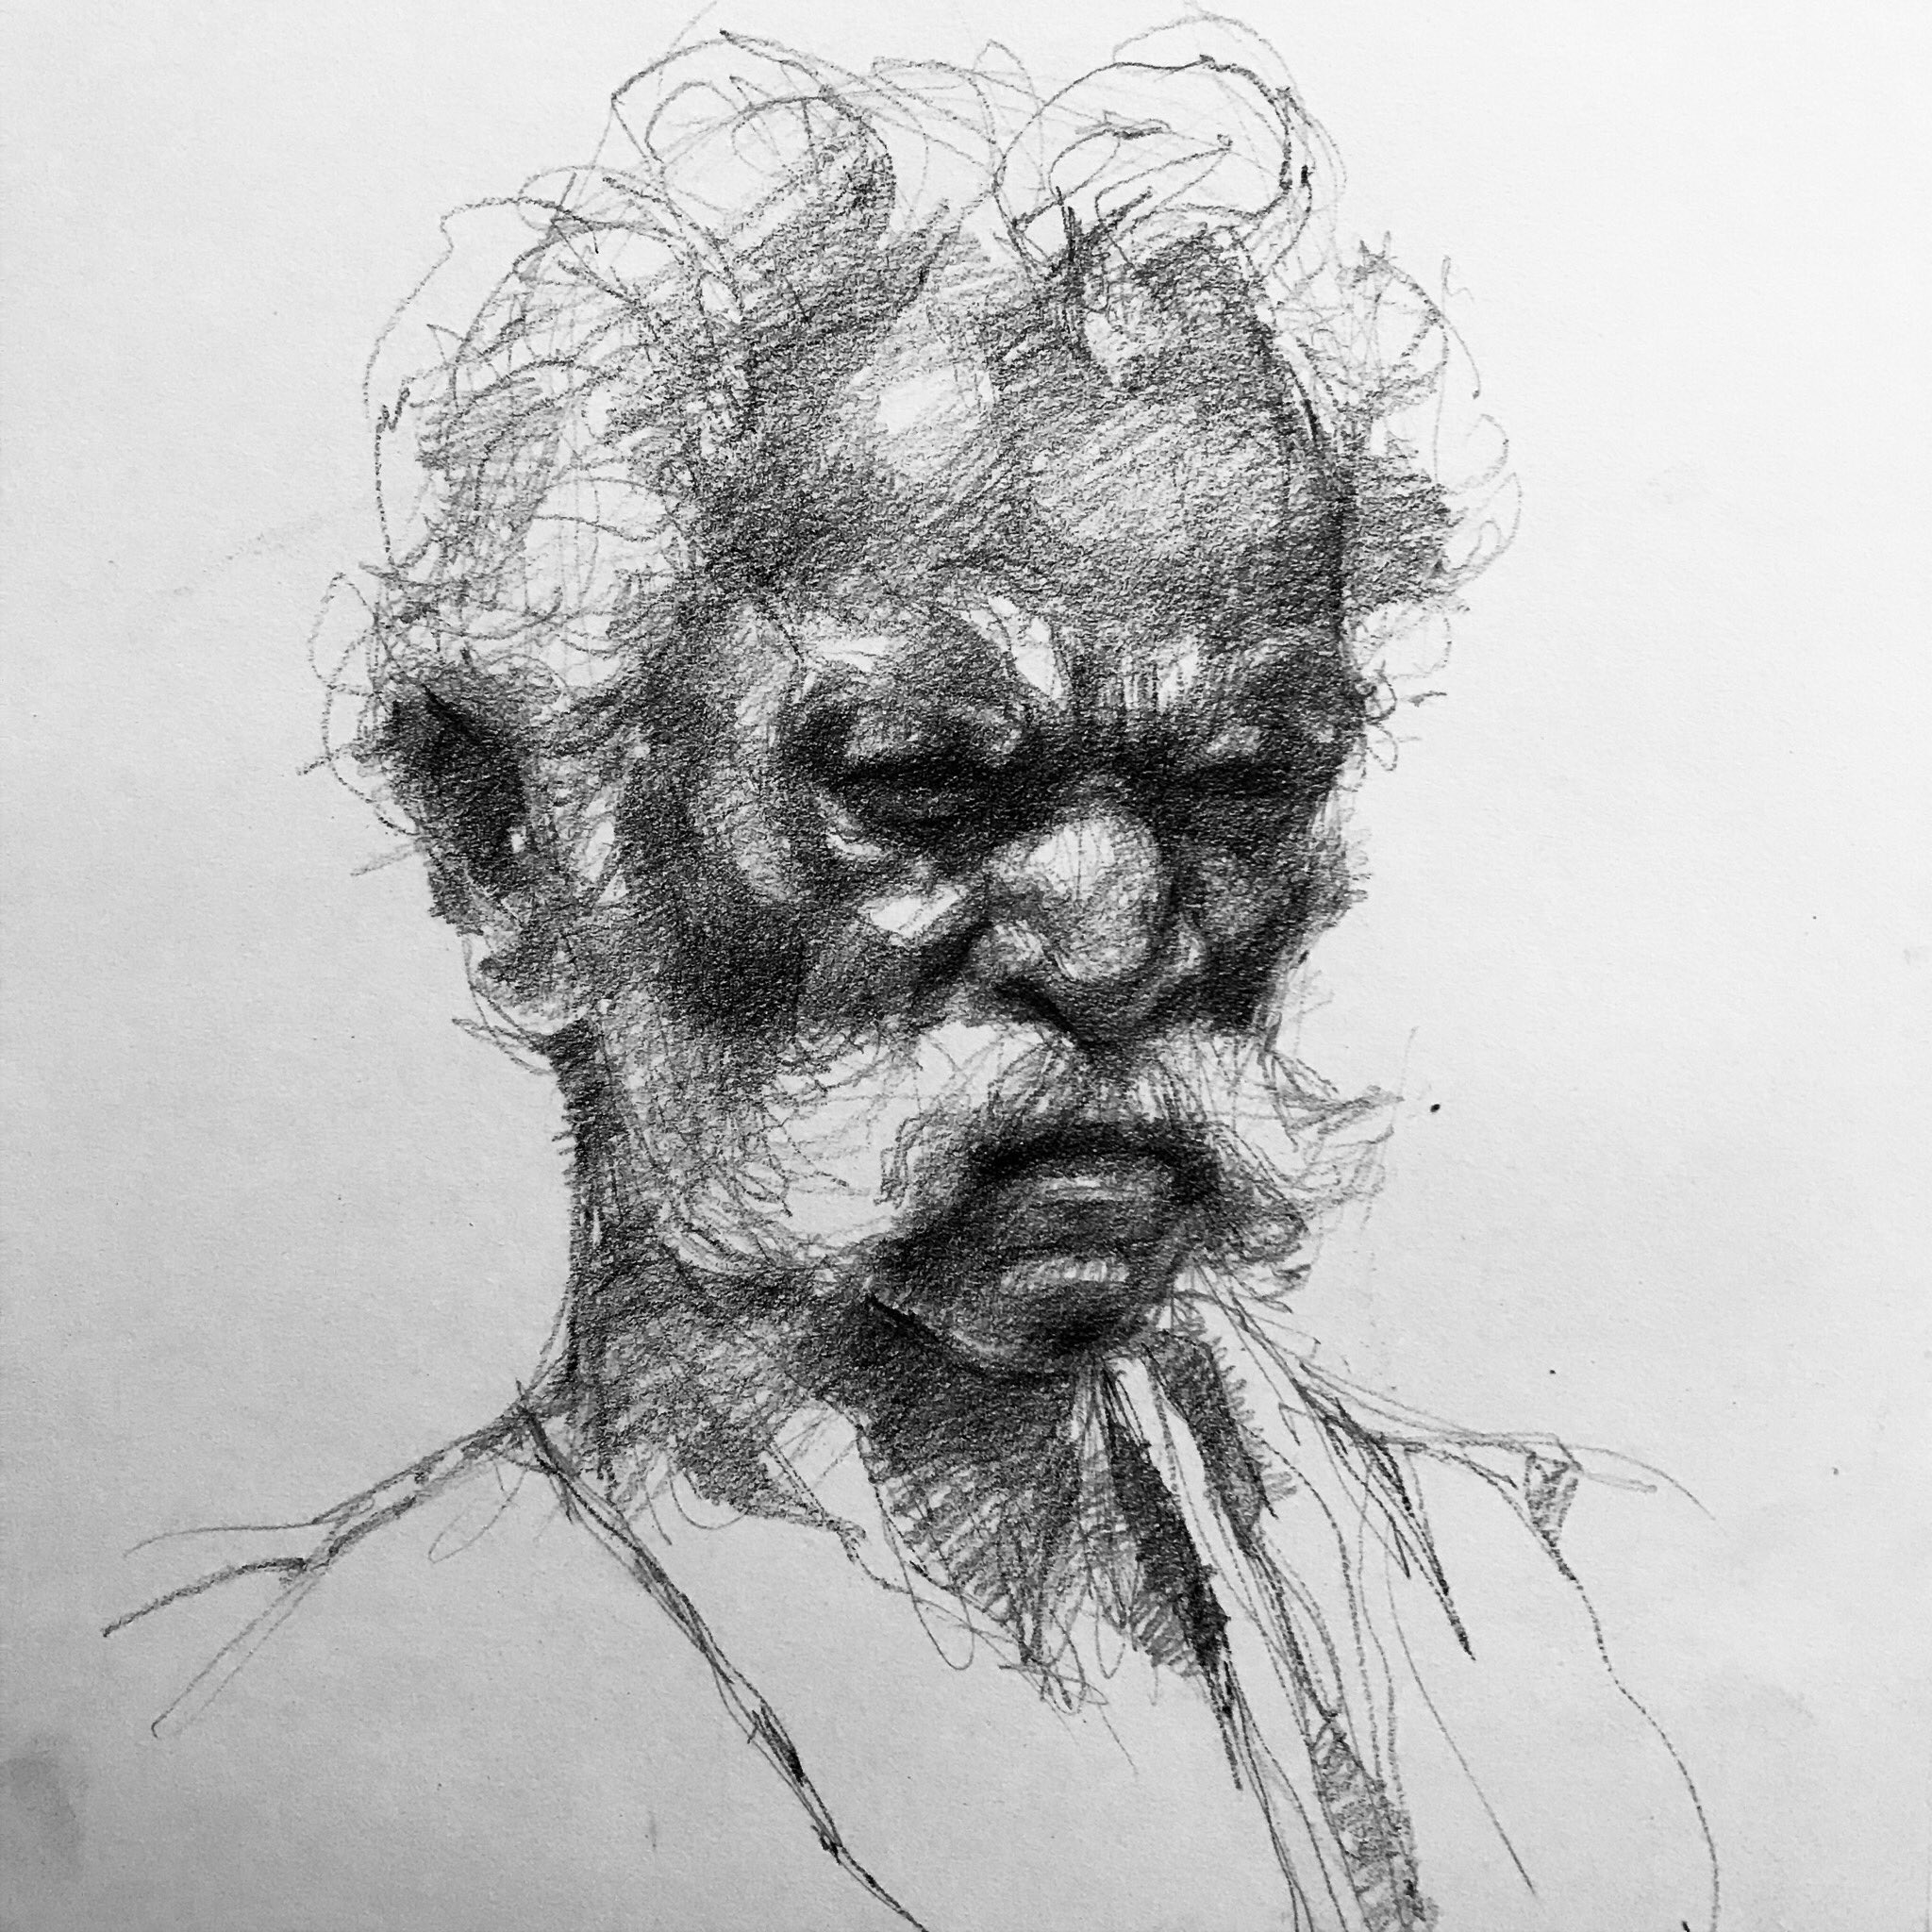 Sketch of an old Indian man by kartiksingh957 on DeviantArt